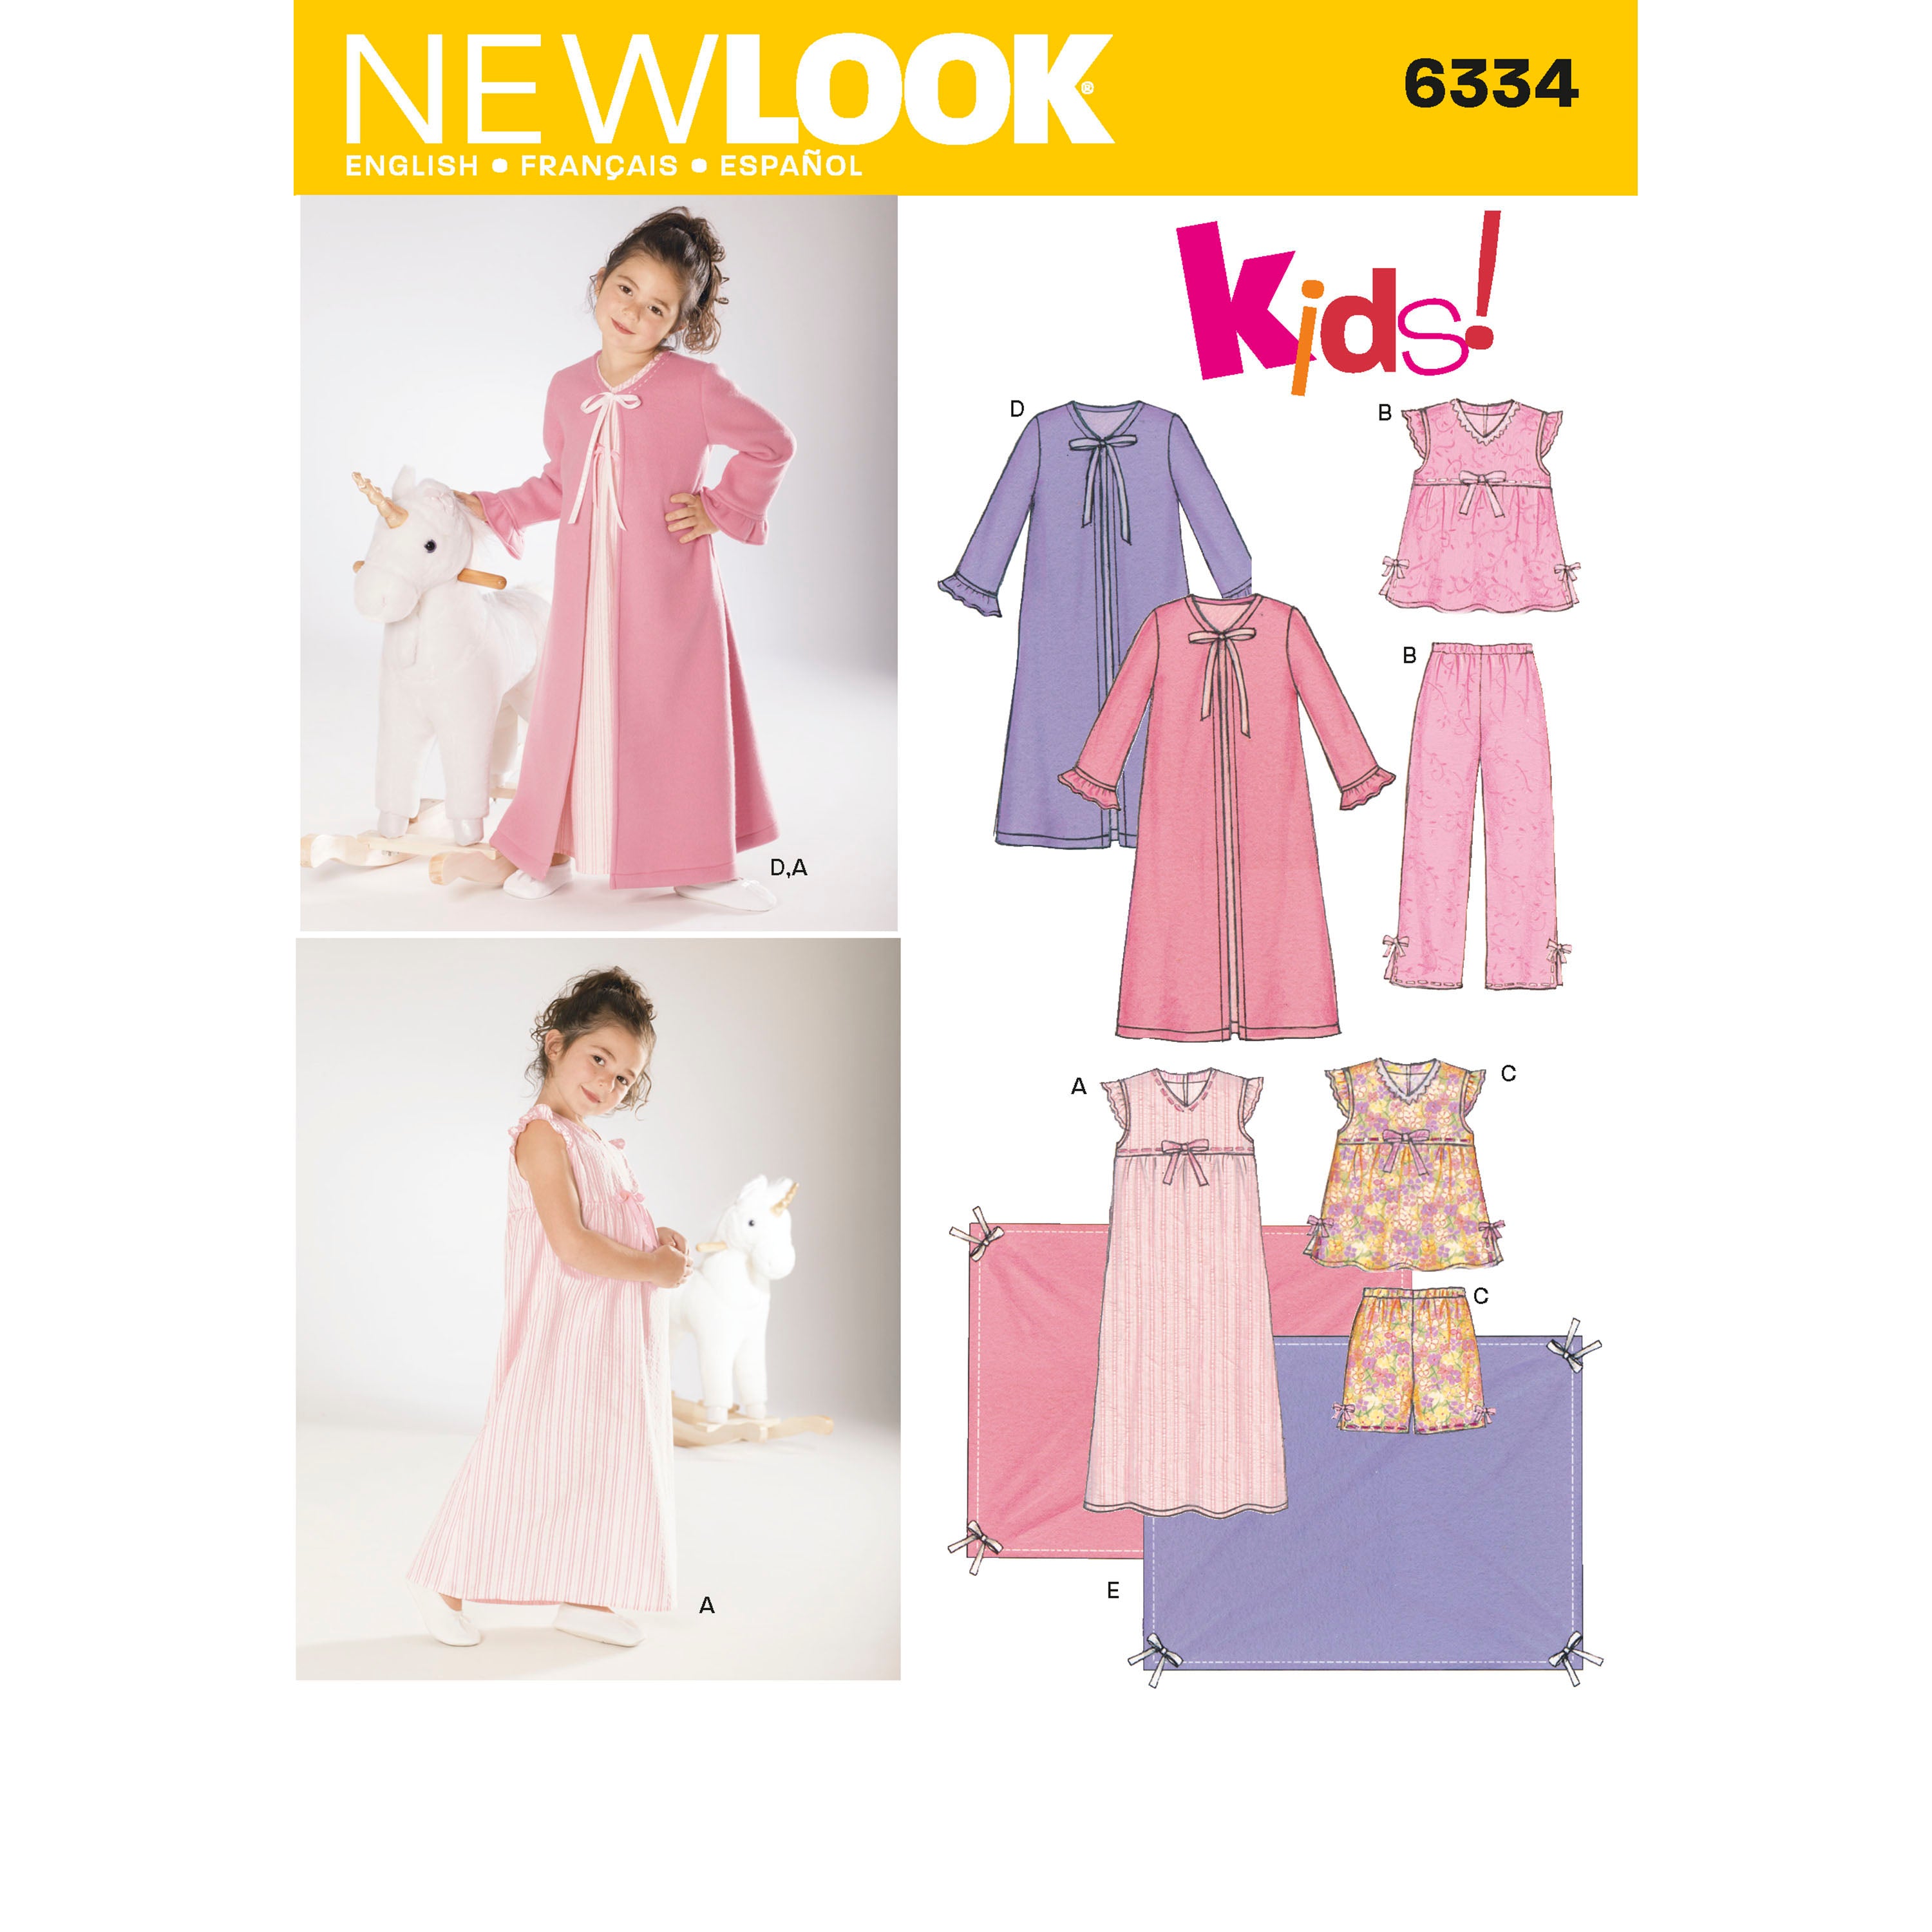 New Look Children's Nightwear N6334